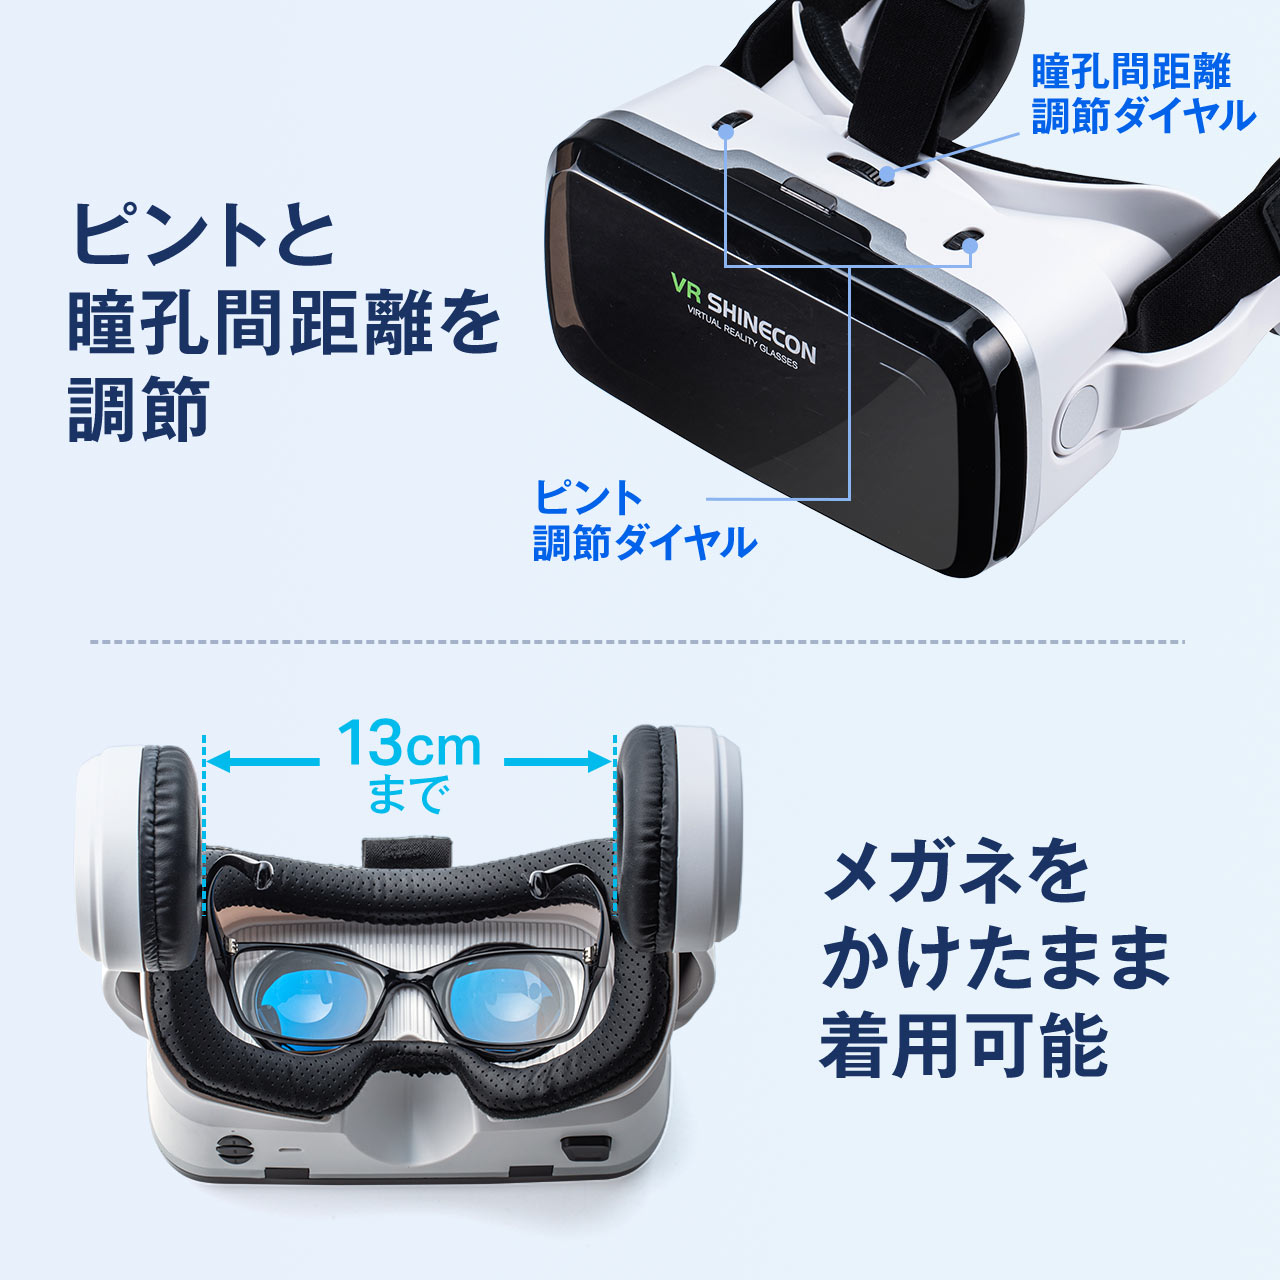 VRゴーグル ヘッドホン一体型 Bluetoothコントローラー内蔵 VRヘッドセット 400-MEDIVR8